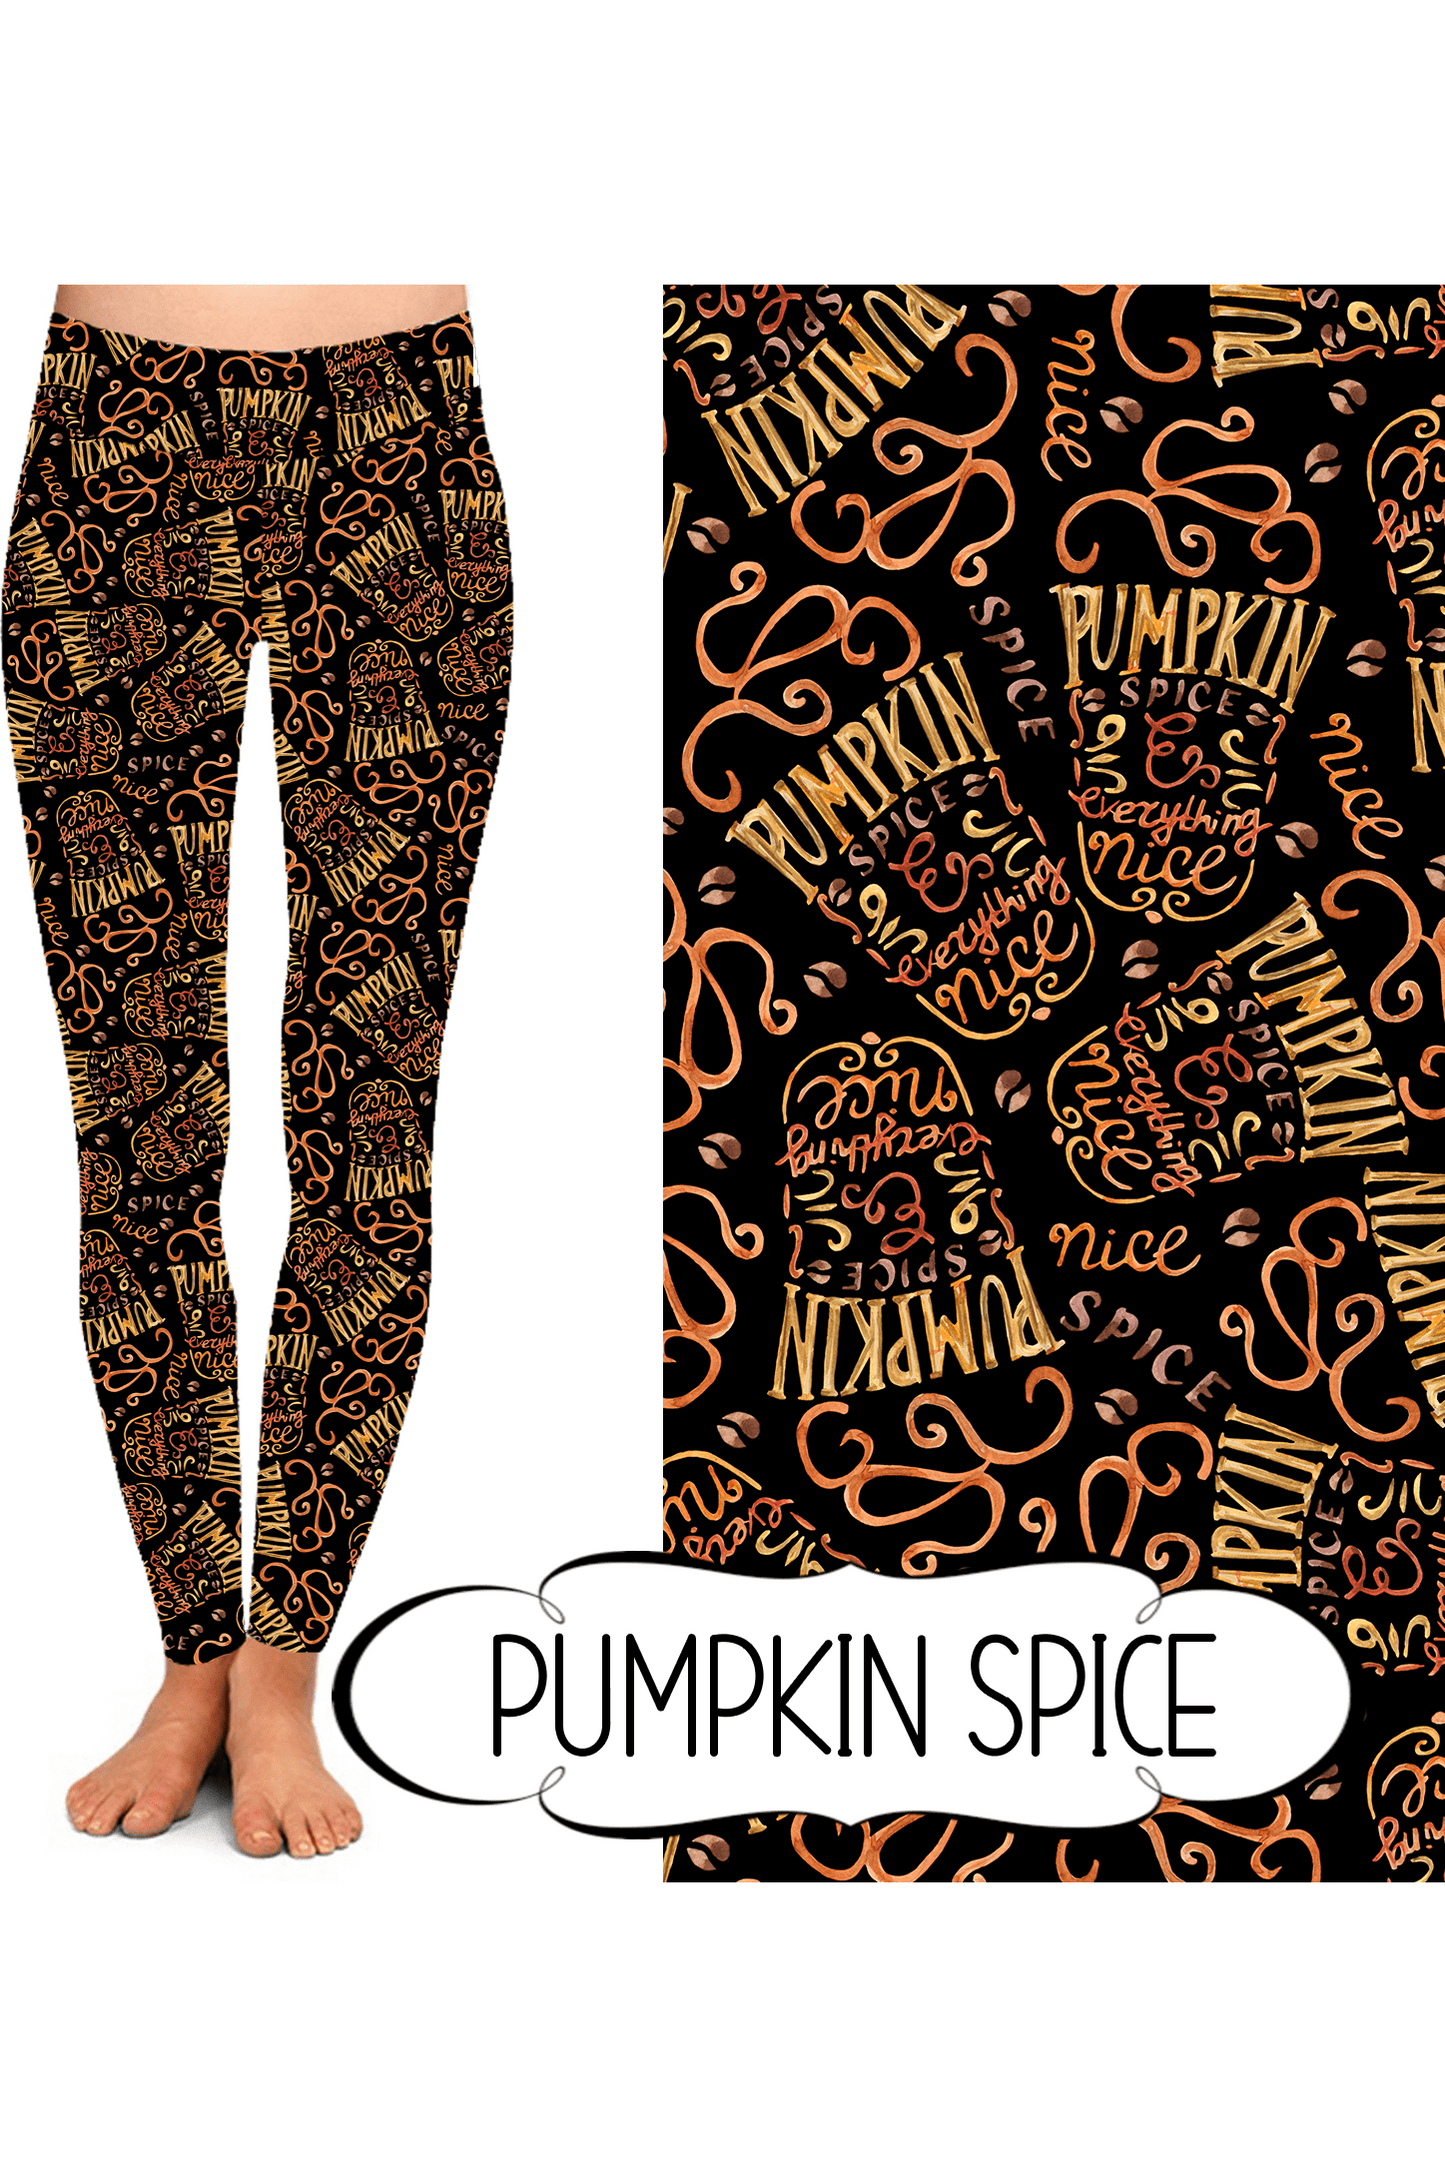 Yoga Style Leggings - Pumpkin Spice by Eleven & Co.